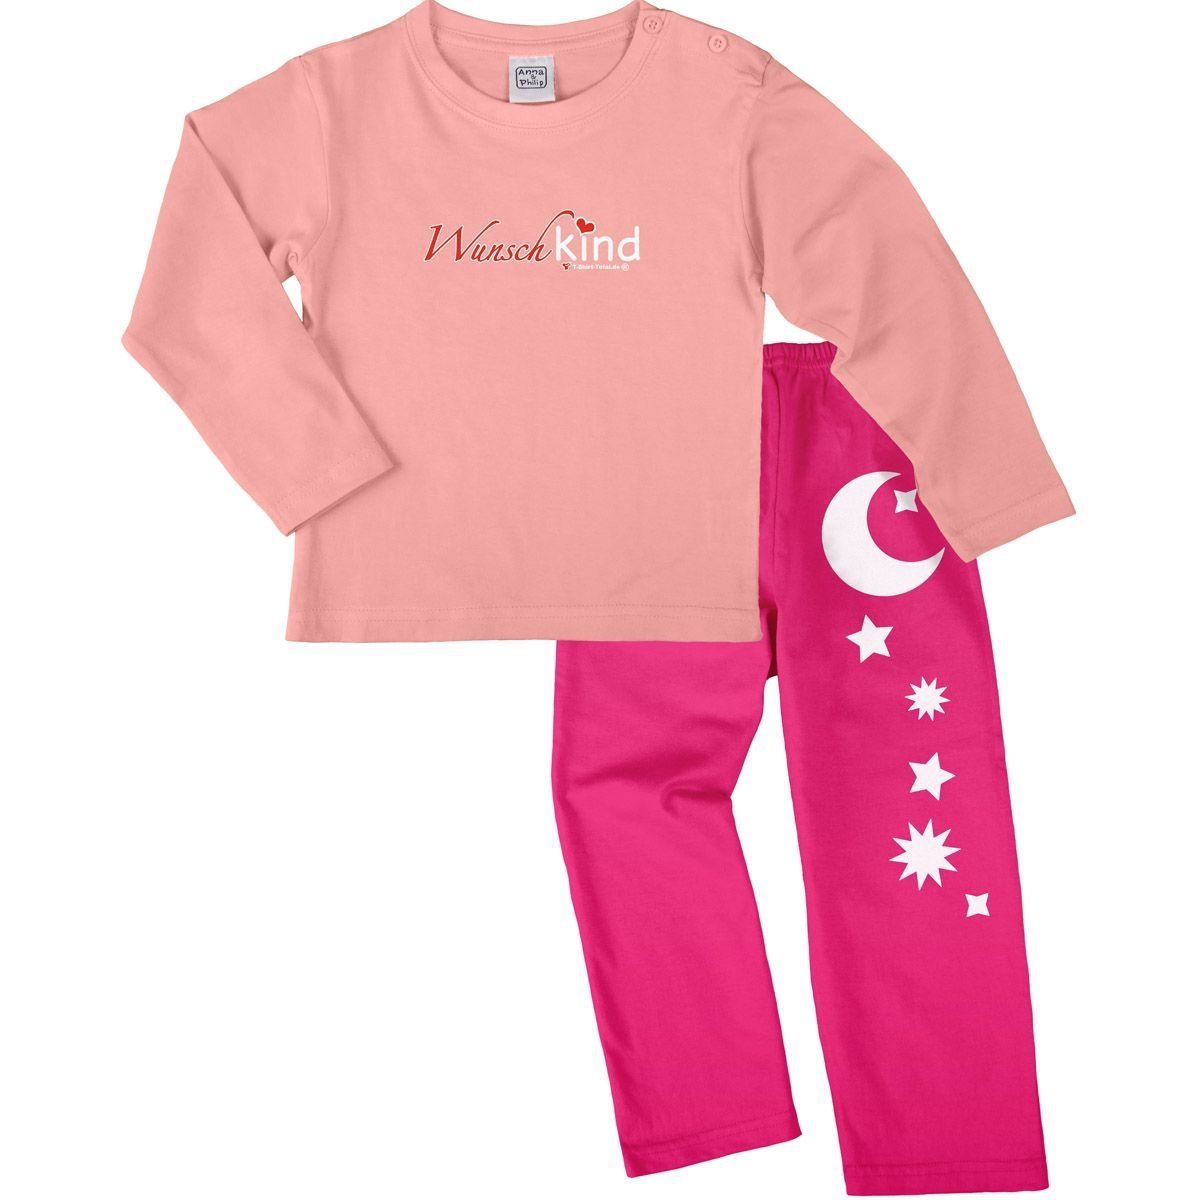 Wunschkind Pyjama Set rosa / pink 110 / 116